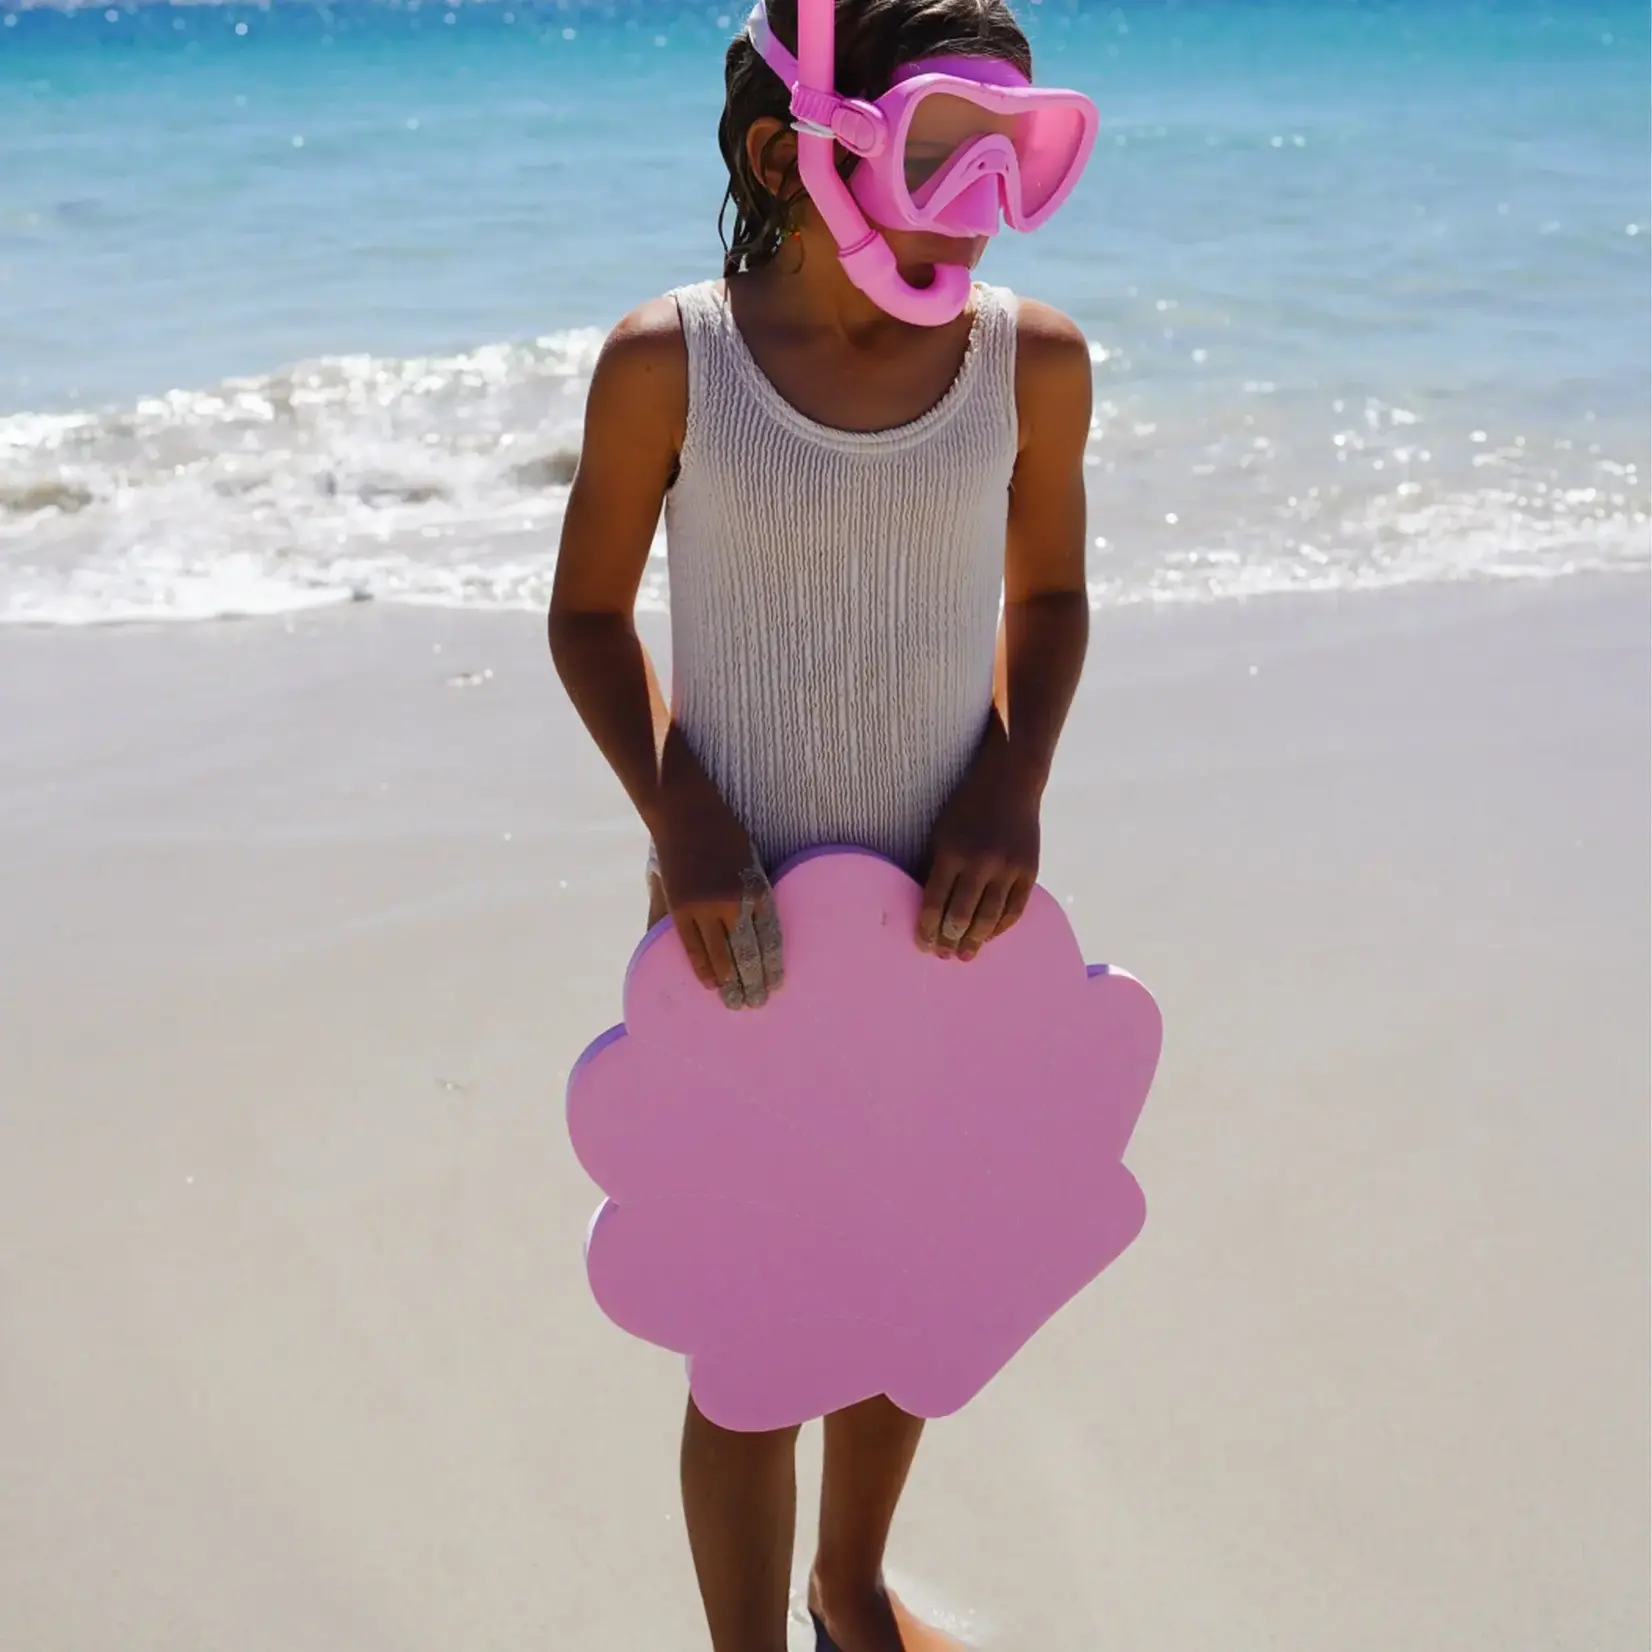 Sunnylife Kids Kickboard Melody the Mermaid Pink